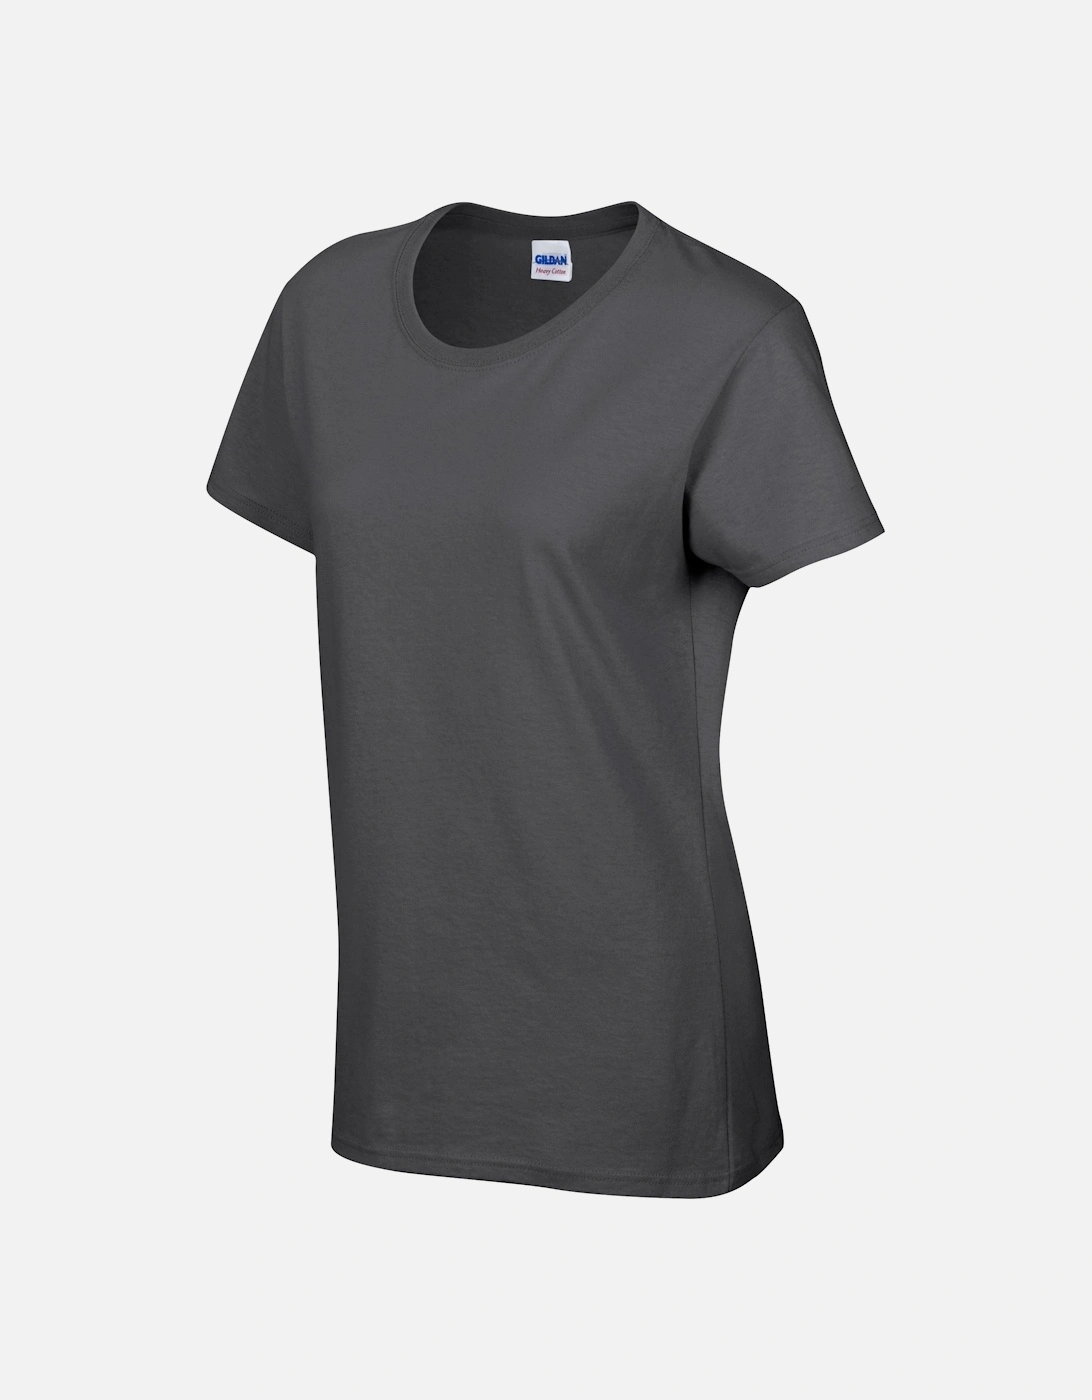 Womens/Ladies Heather T-Shirt